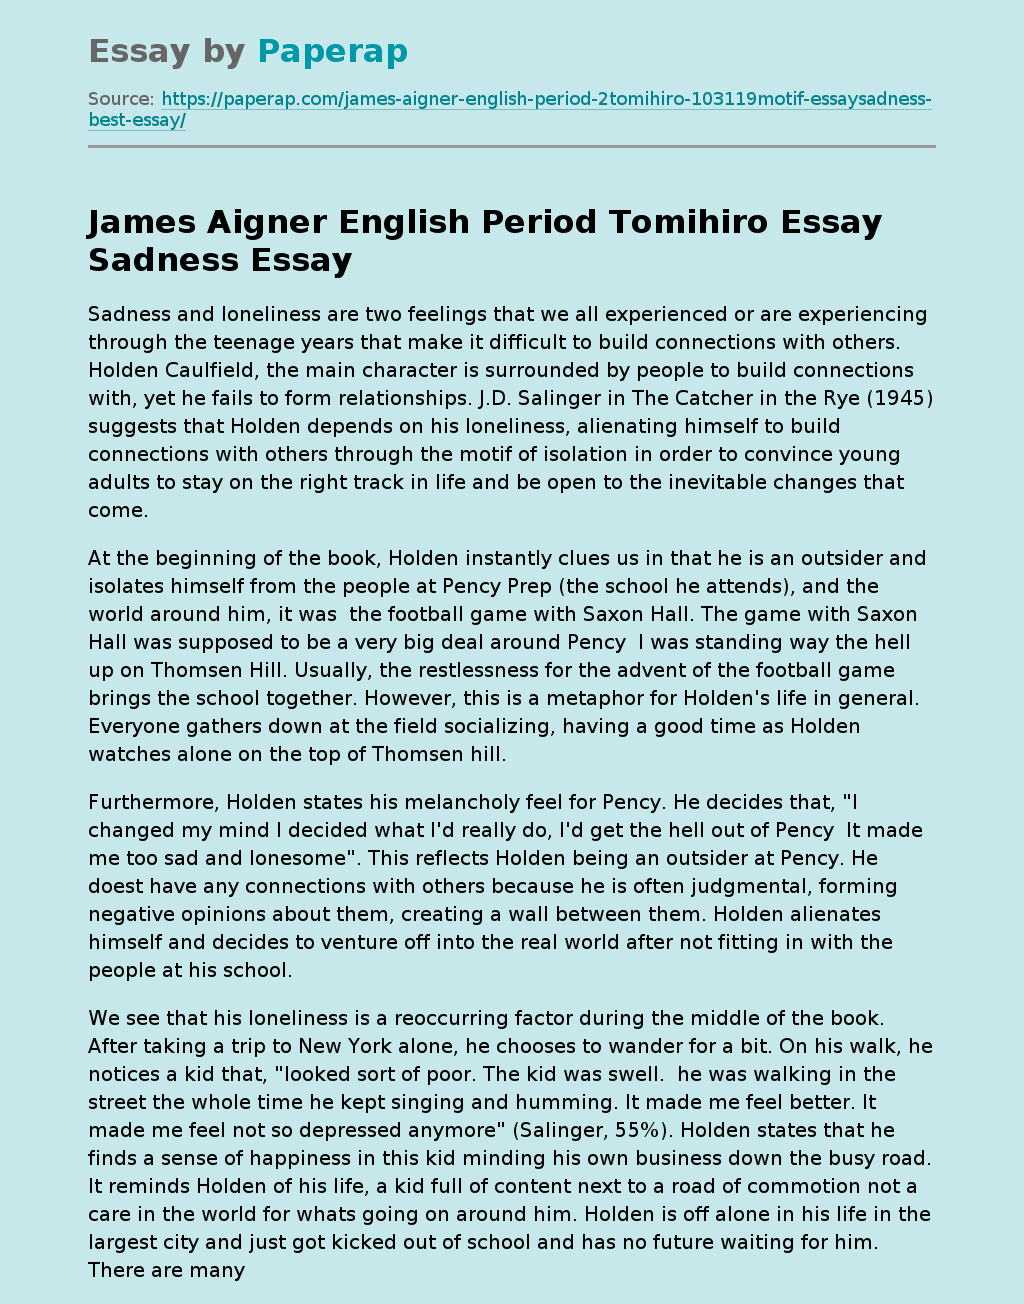 James Aigner English Period Tomihiro  Essay Sadness